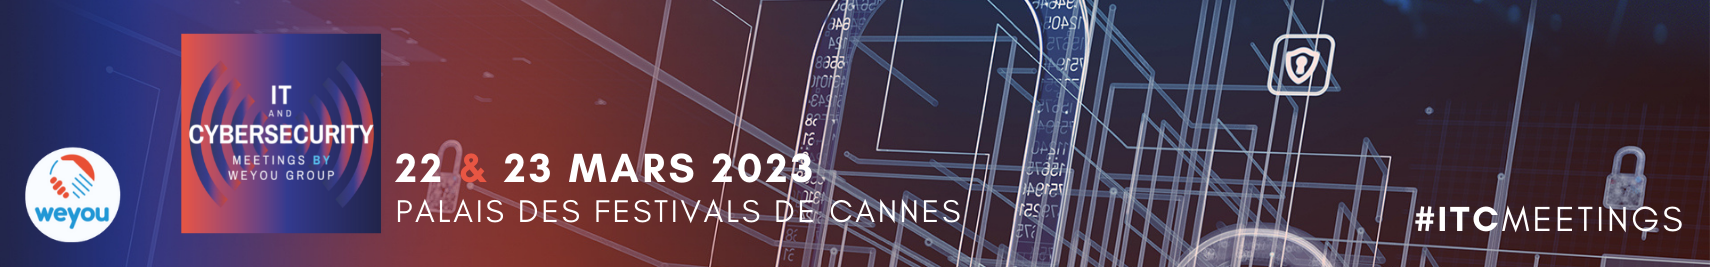 ITC Meeting - IT & Cybersecurity Meetings - 2023 03 22/23 - Cannes